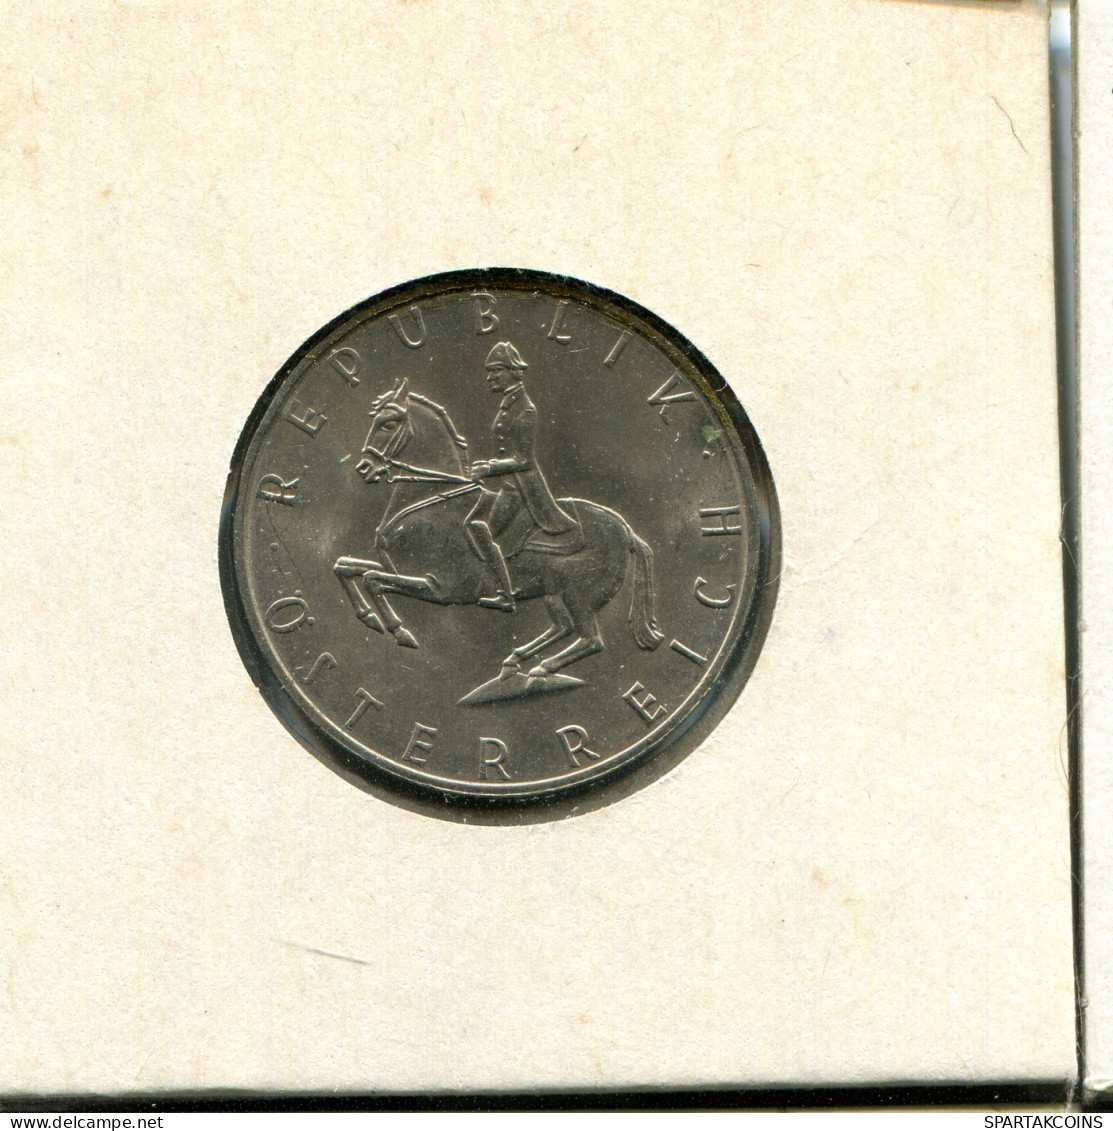 5 SCHILLING 1980 AUSTRIA Coin #AW836.U.A - Oesterreich